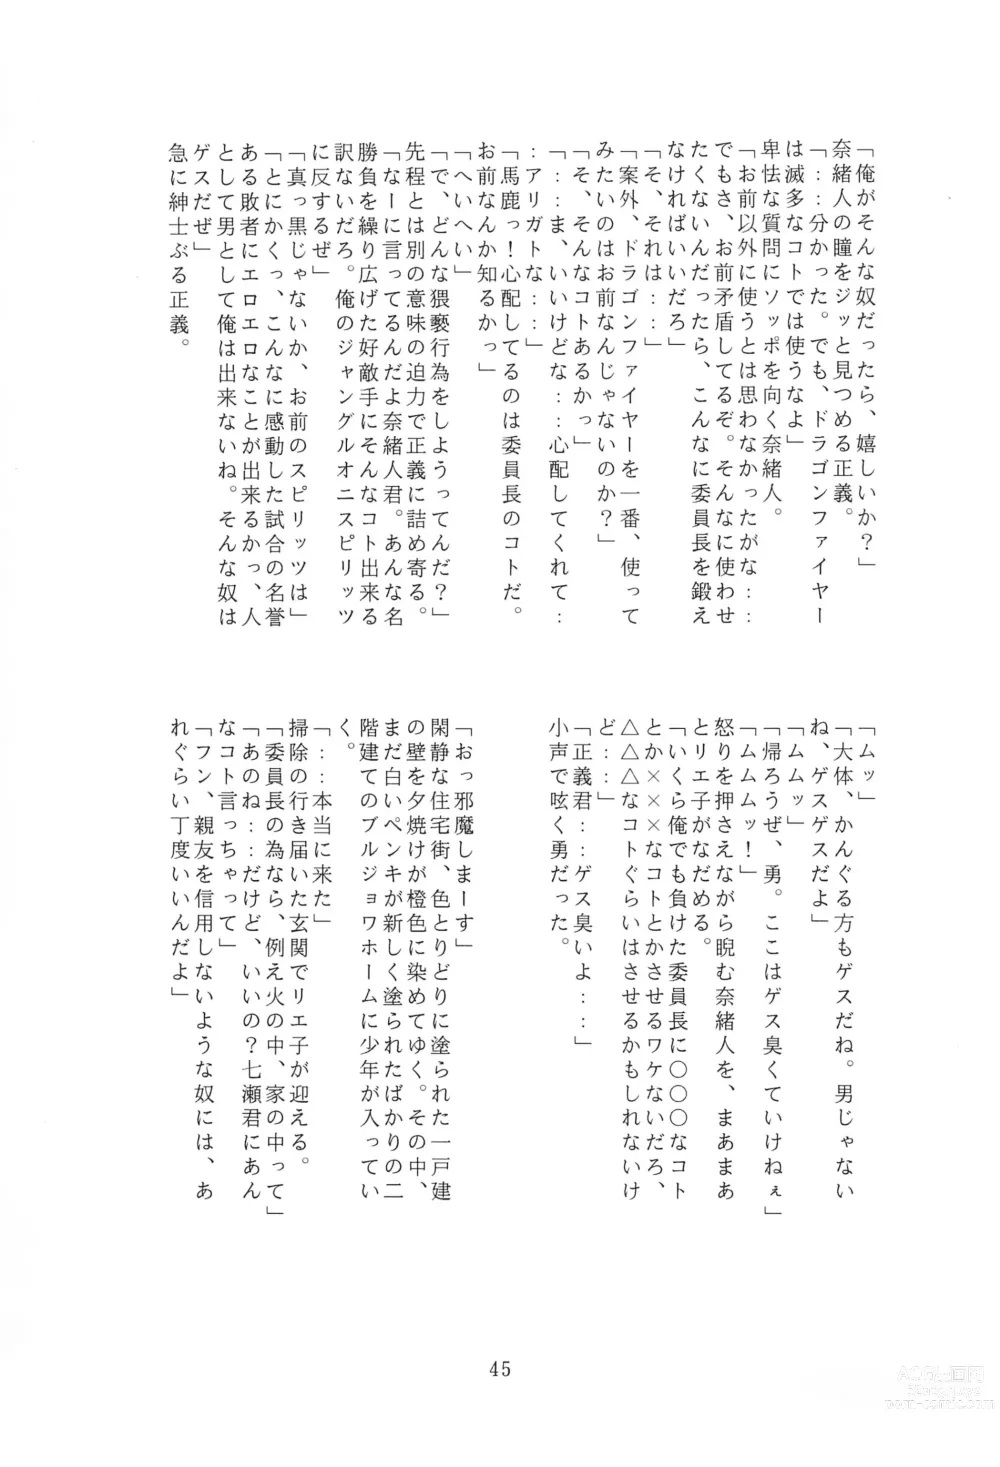 Page 45 of doujinshi JANGLE ONI Mermaid